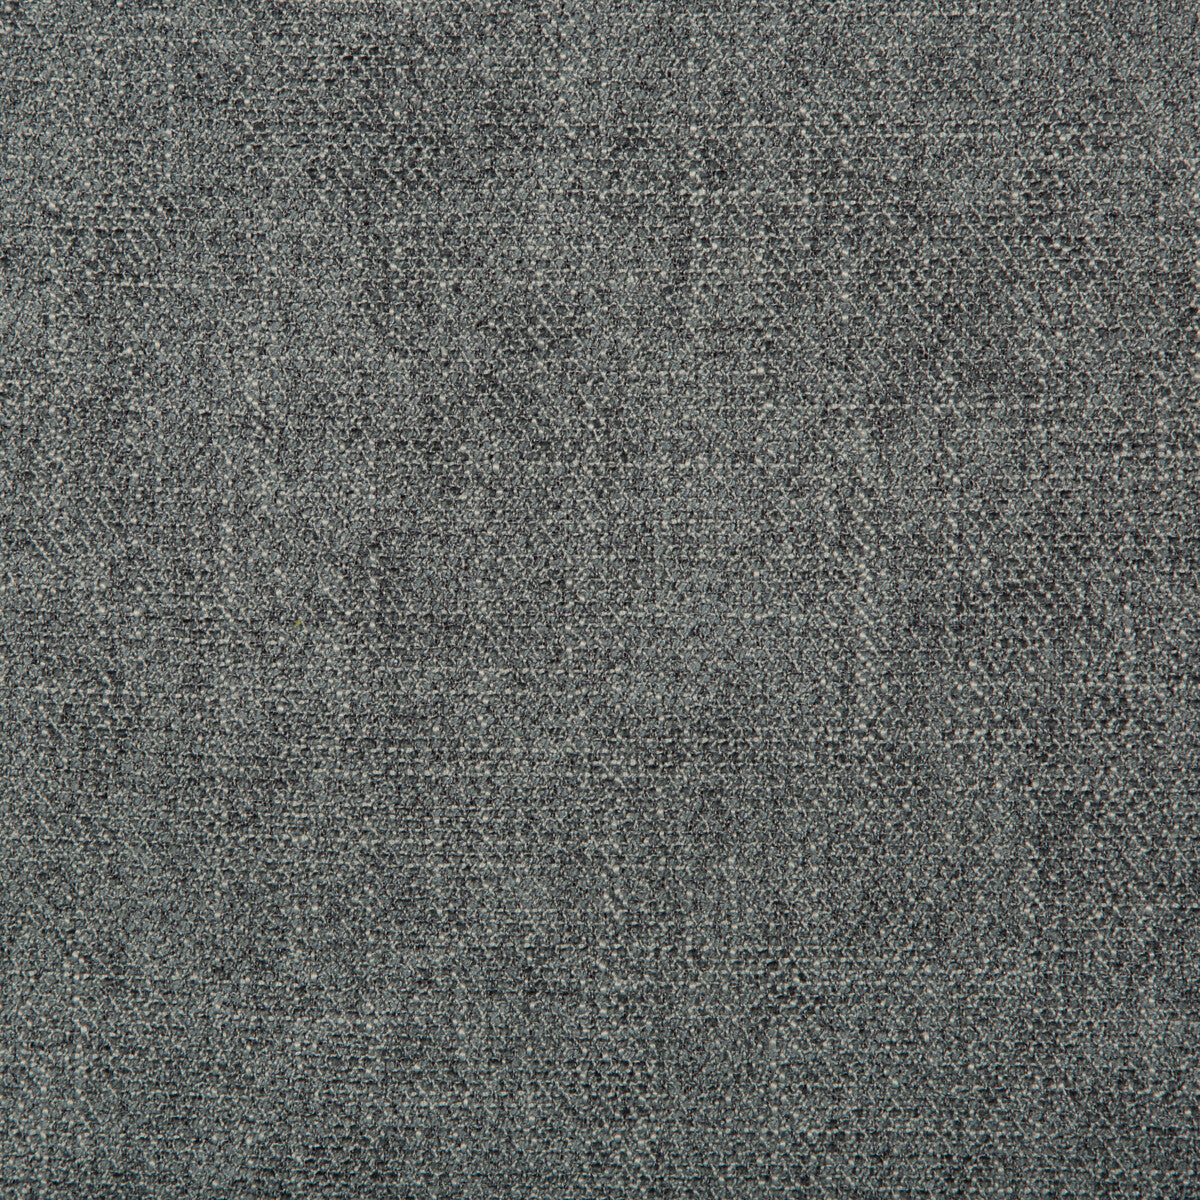 Kf Smt fabric - pattern 35060.52.0 - by Kravet Smart in the Performance Kravetarmor collection